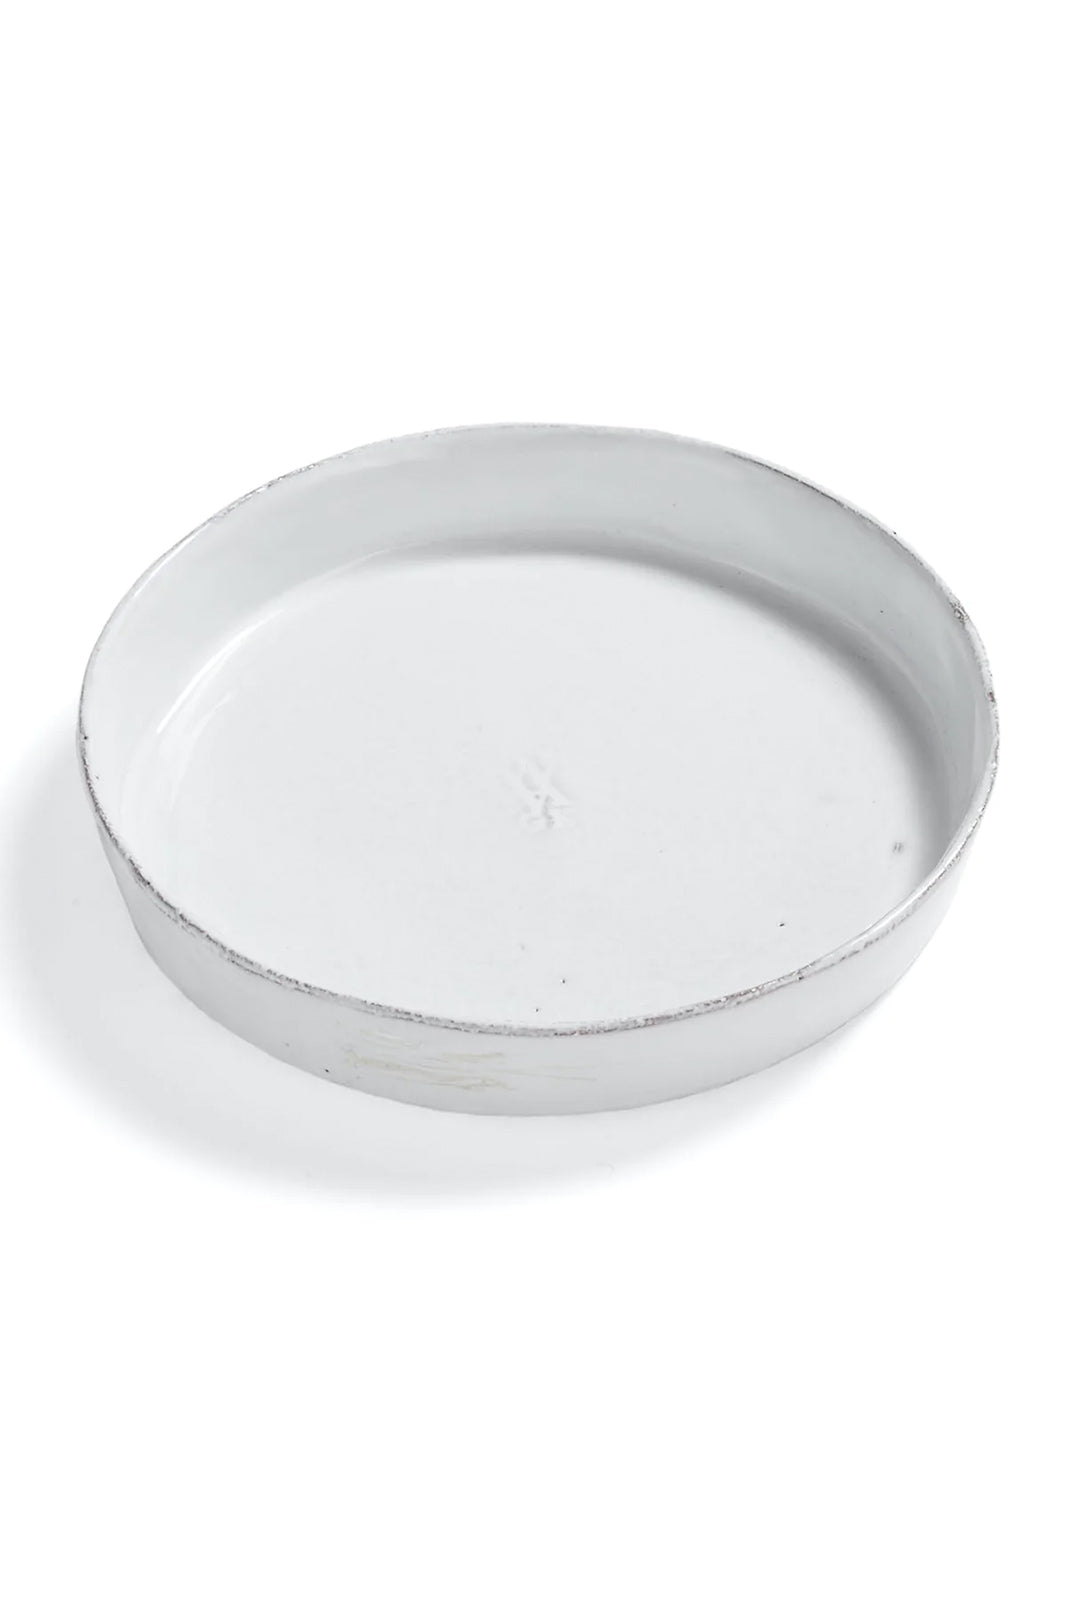 Large Simple Round Platter